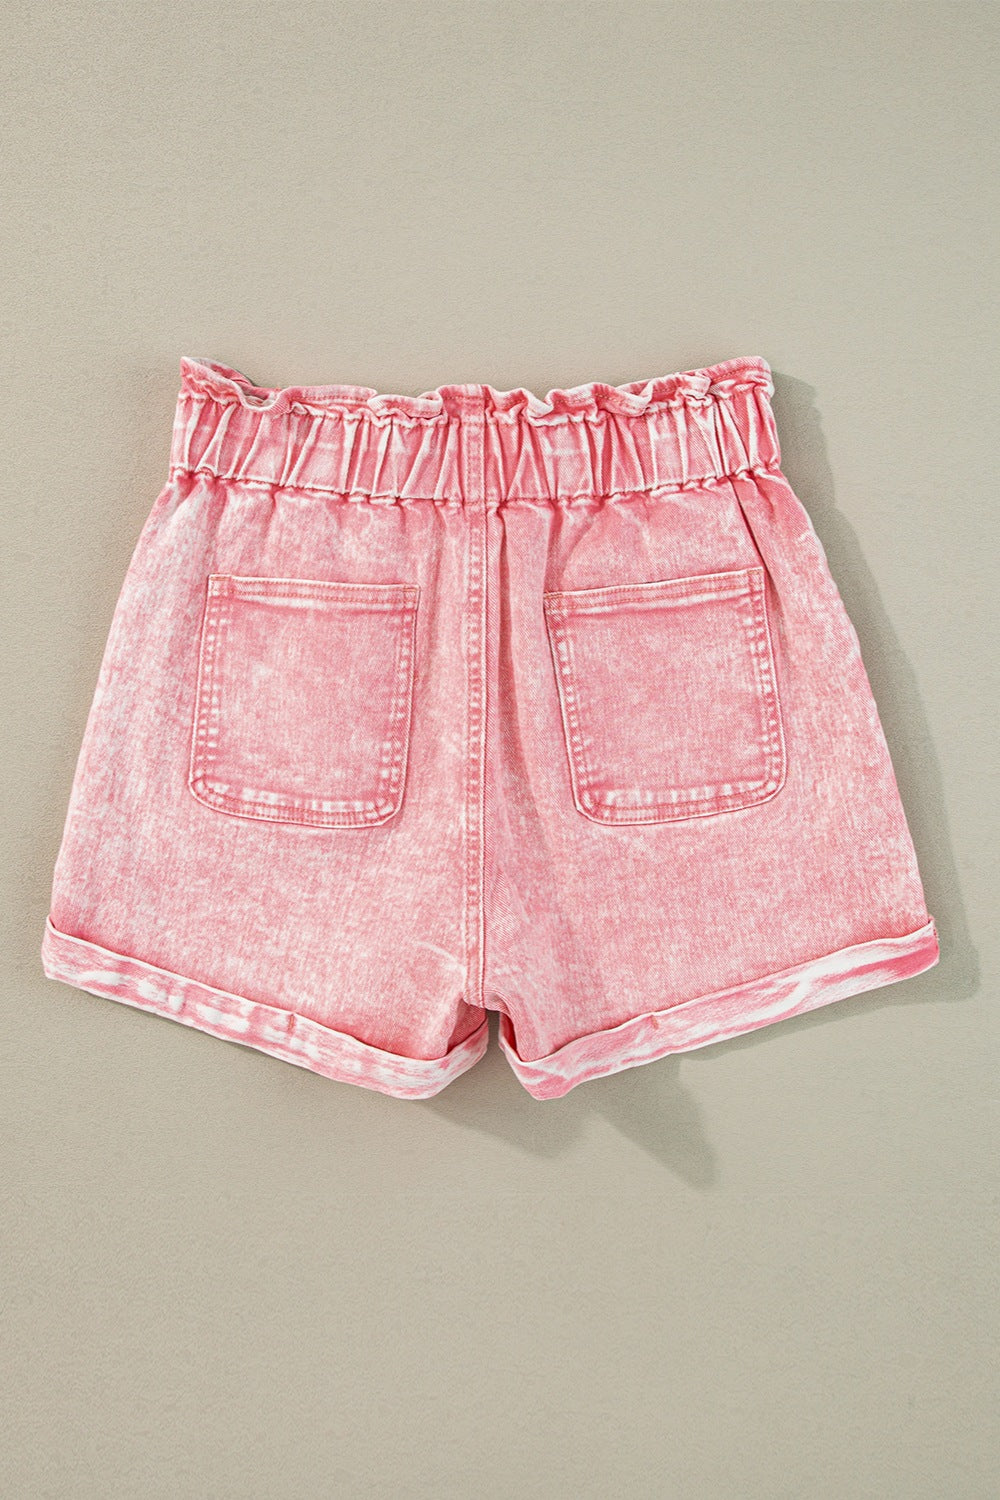 Lily Grace Paperbag Denim Shorts